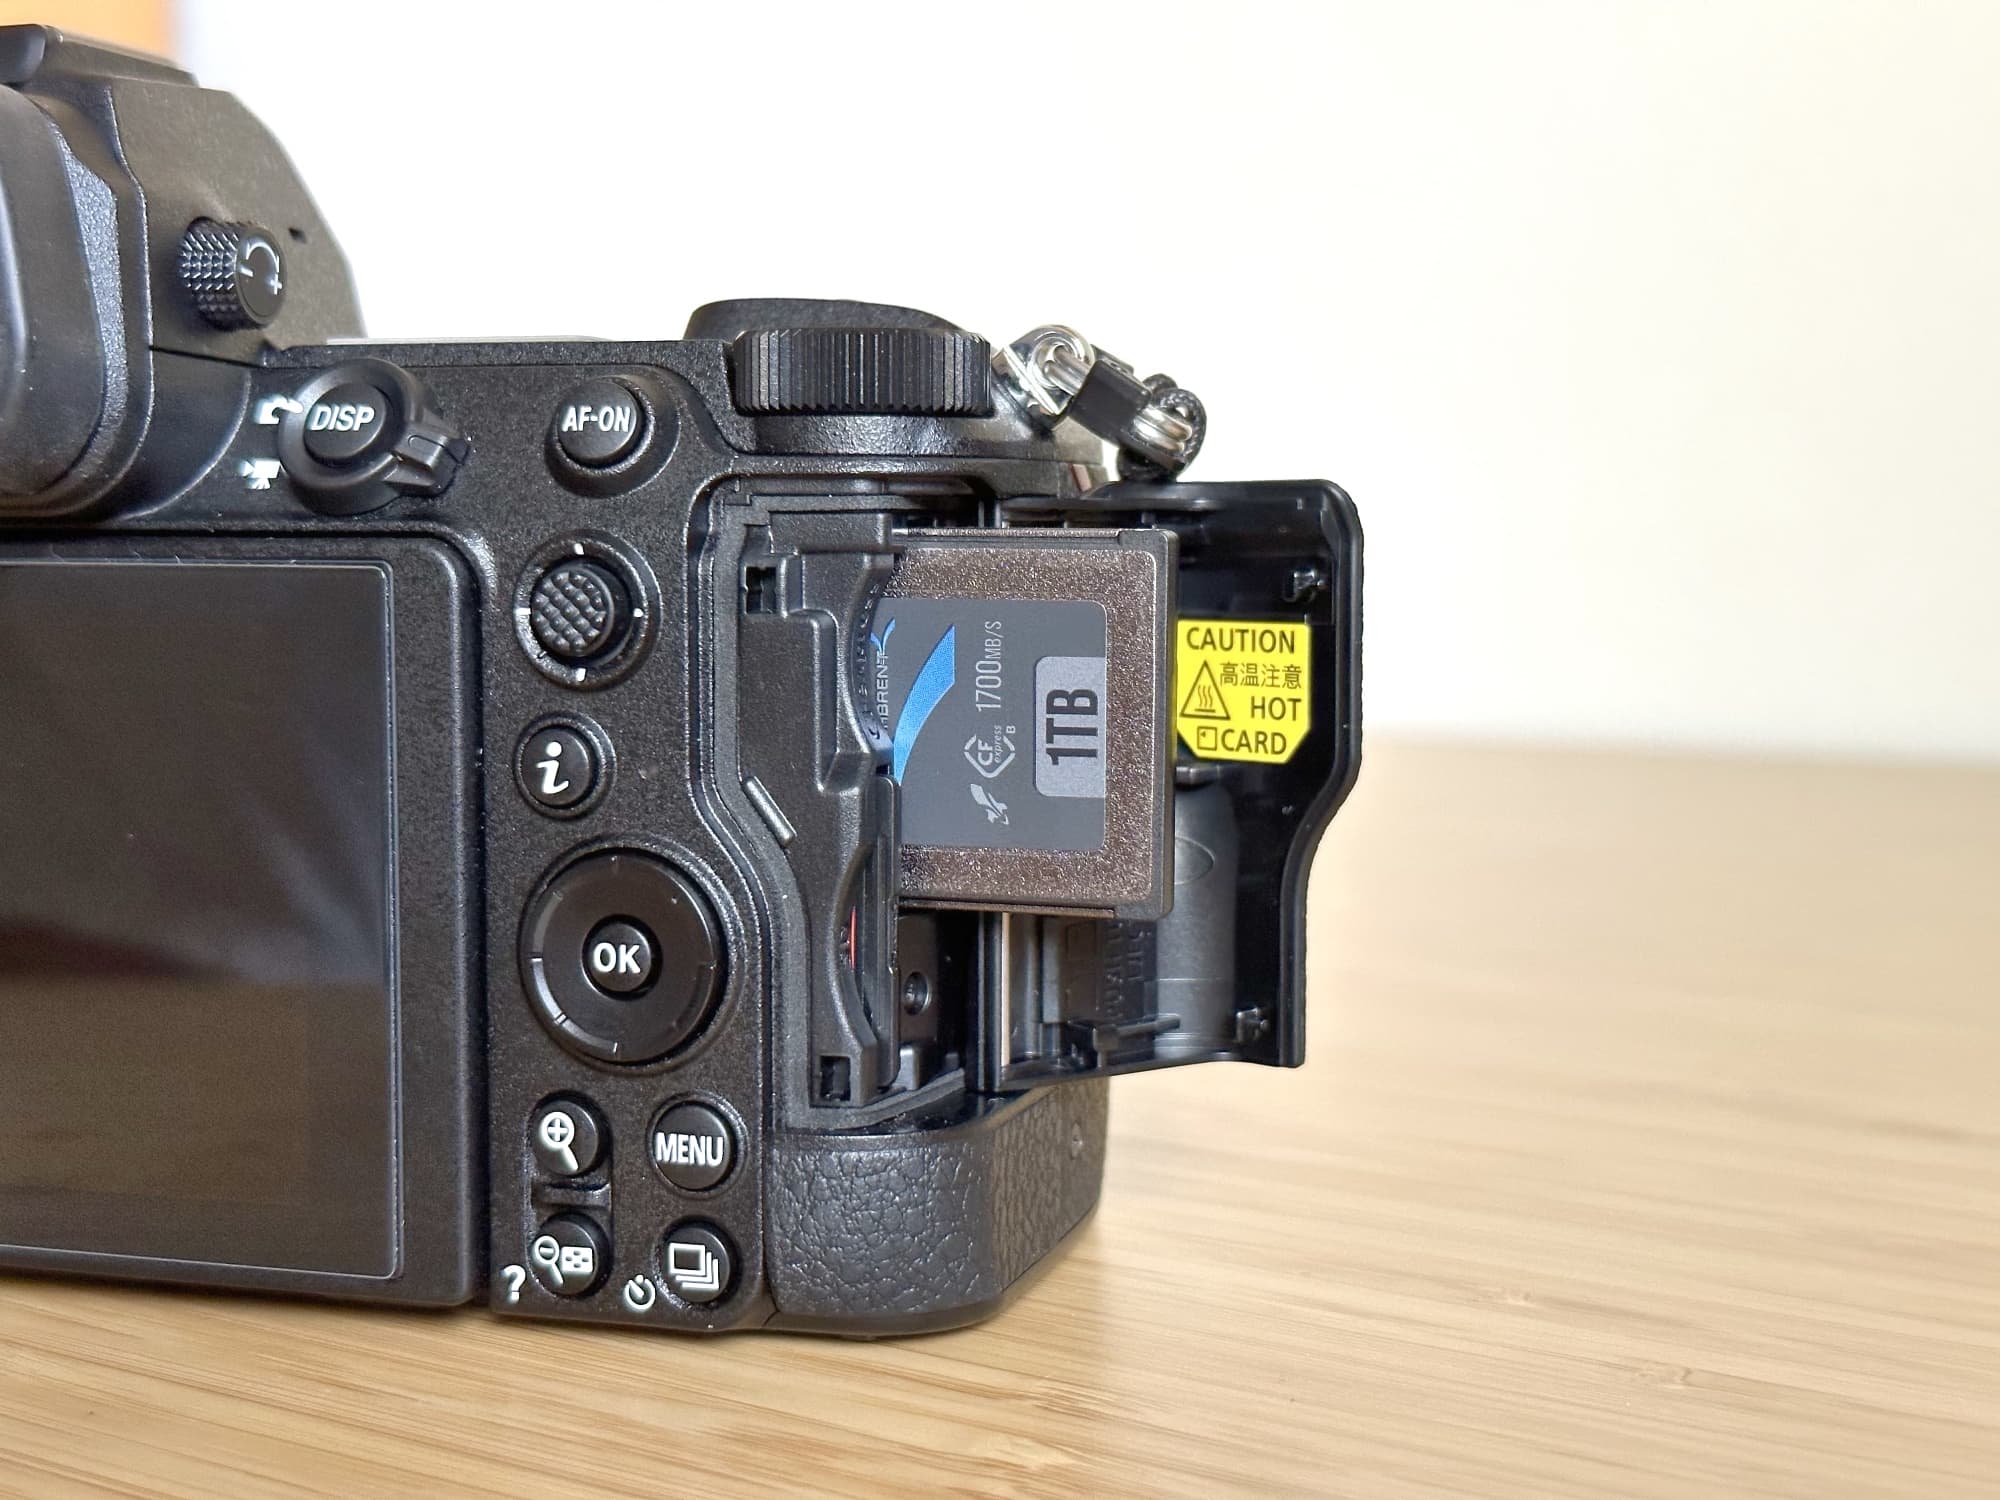 Sabrent CFExpress Type B card in Nikon Z6 ii camera body.